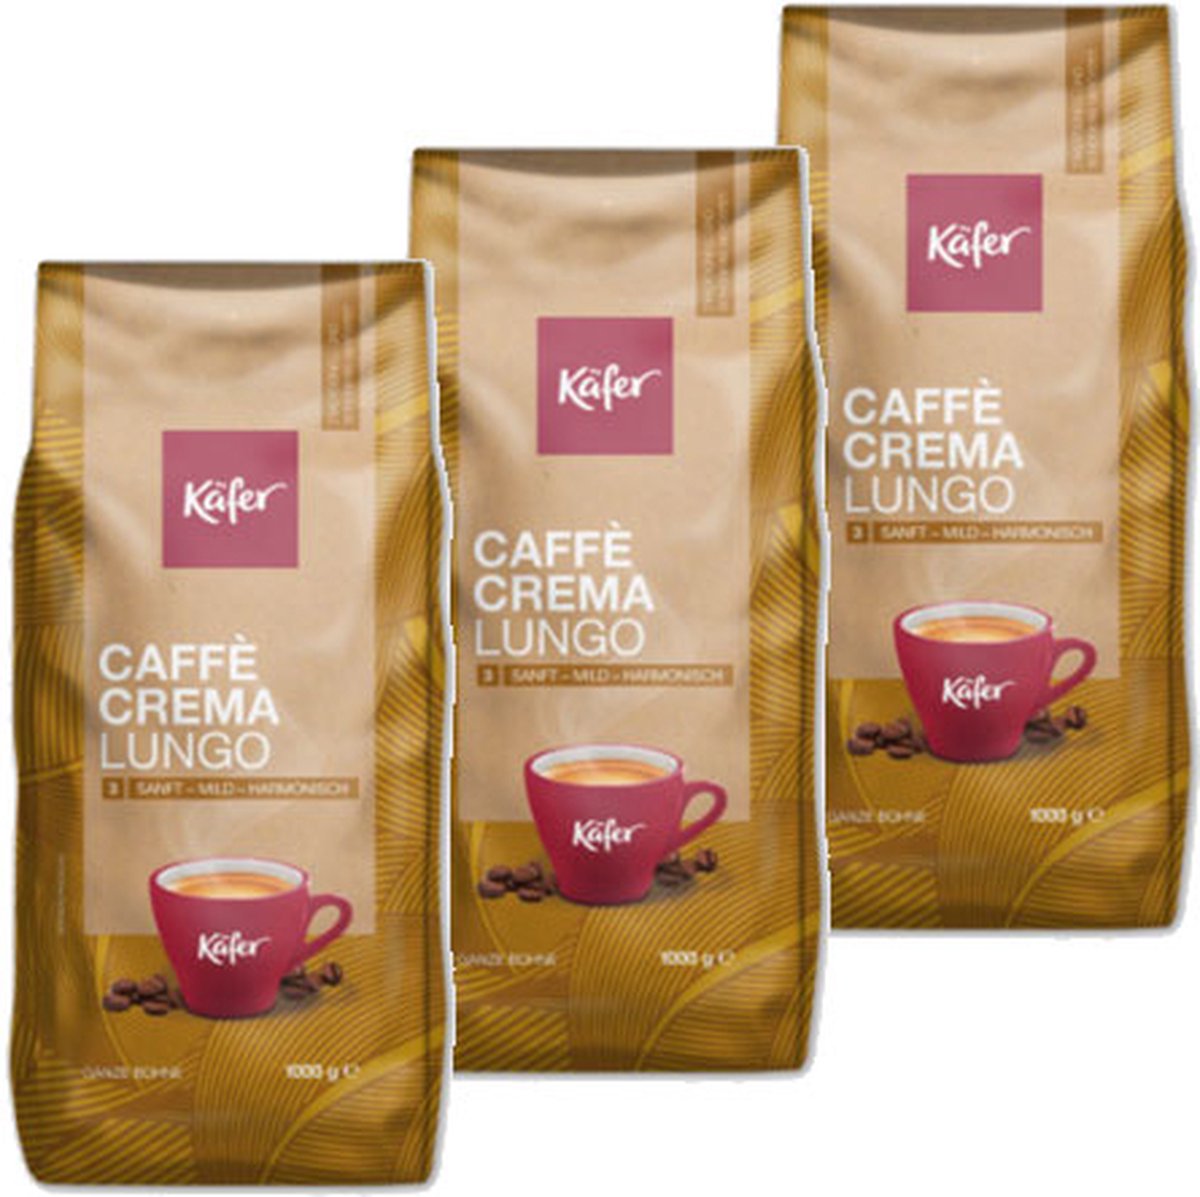 Käfer Caffè Crema Lungo - koffiebonen - 3 x 1 kilo